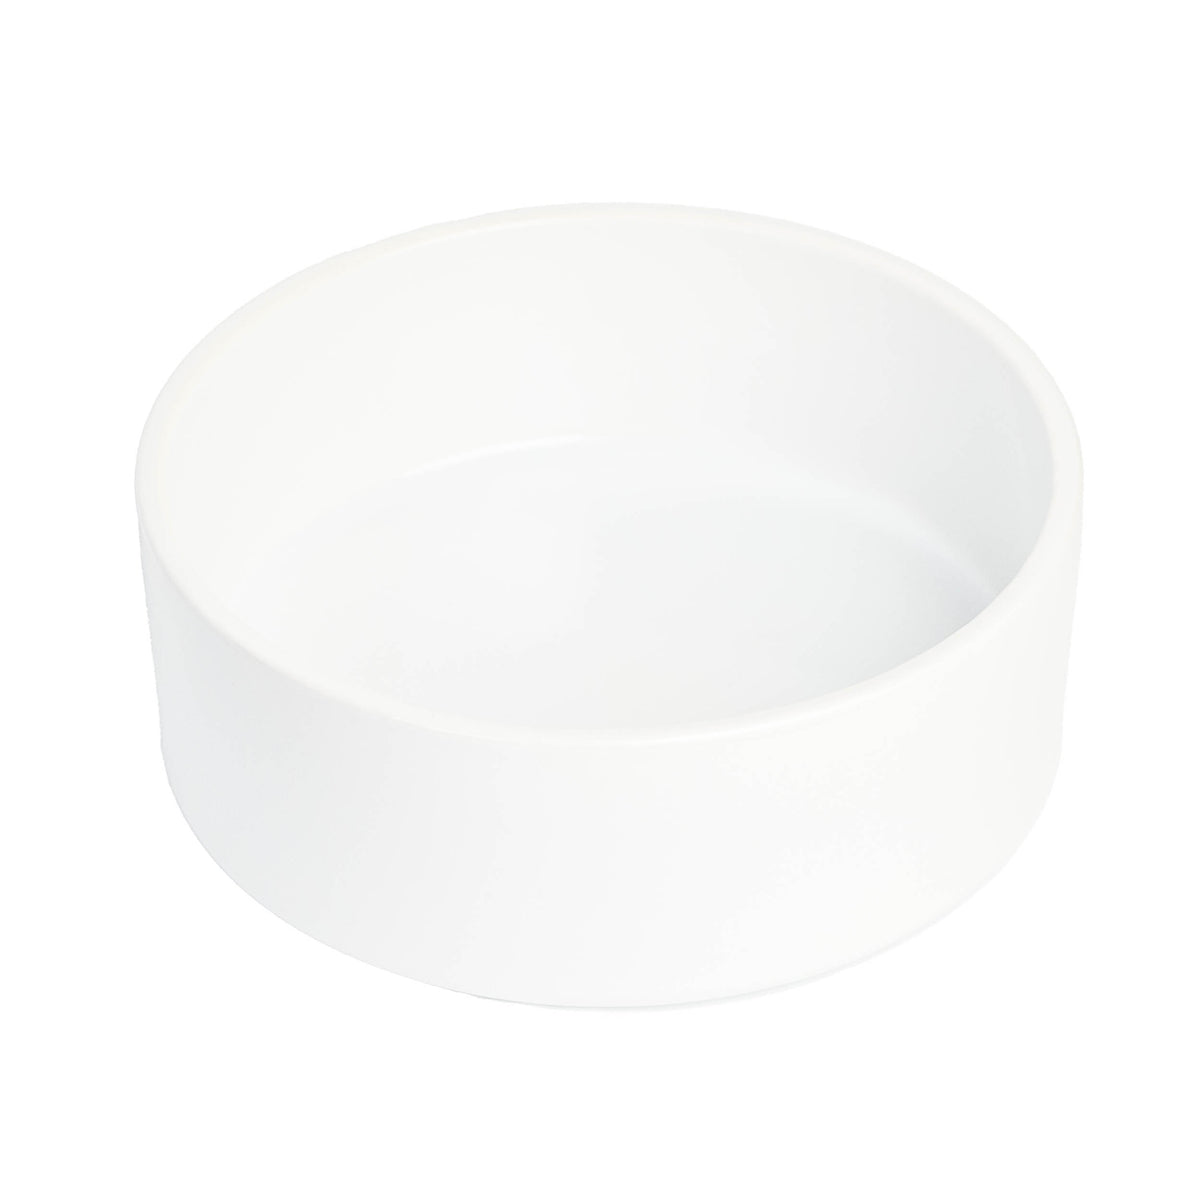 Personalised bowl for cats / ceramic - 22oz 650ml (design 3)